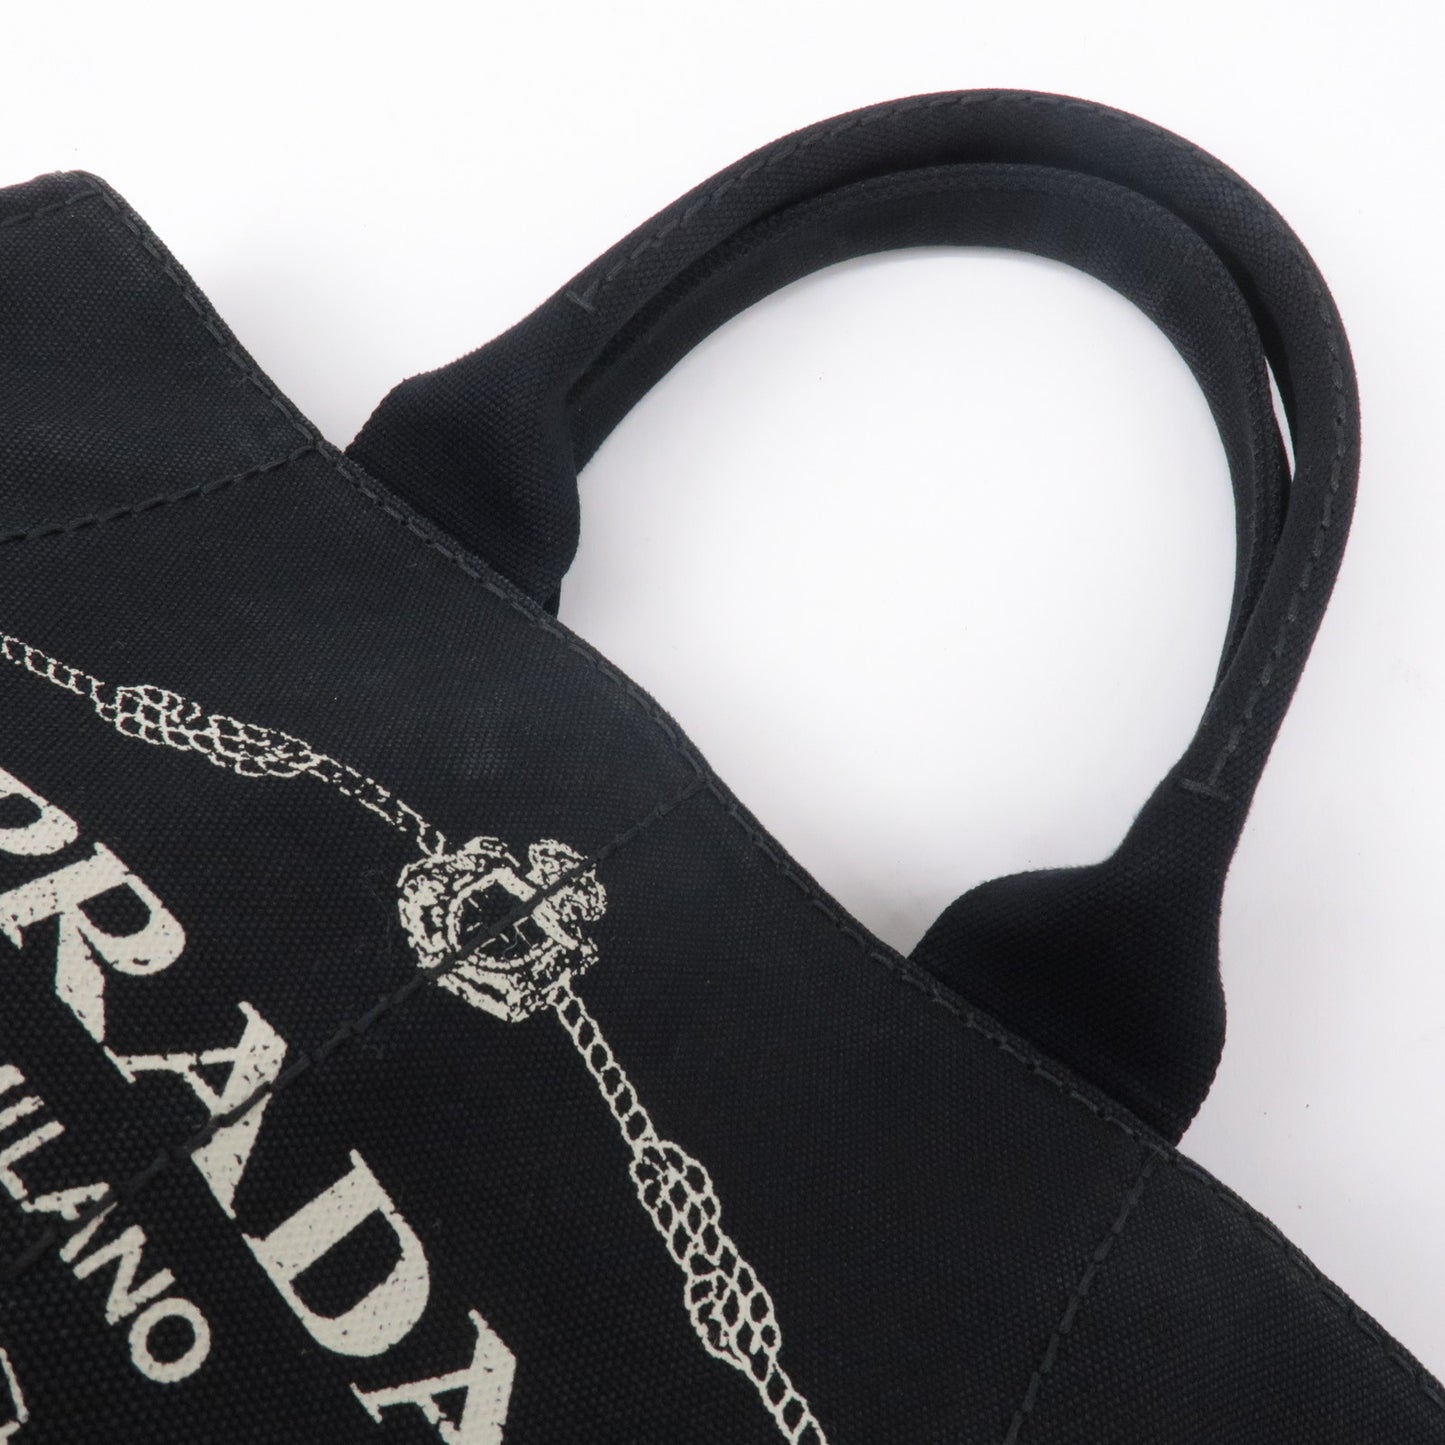 PRADA Logo Canapa Canvas Tote Bag Hand Bag Black BN1877